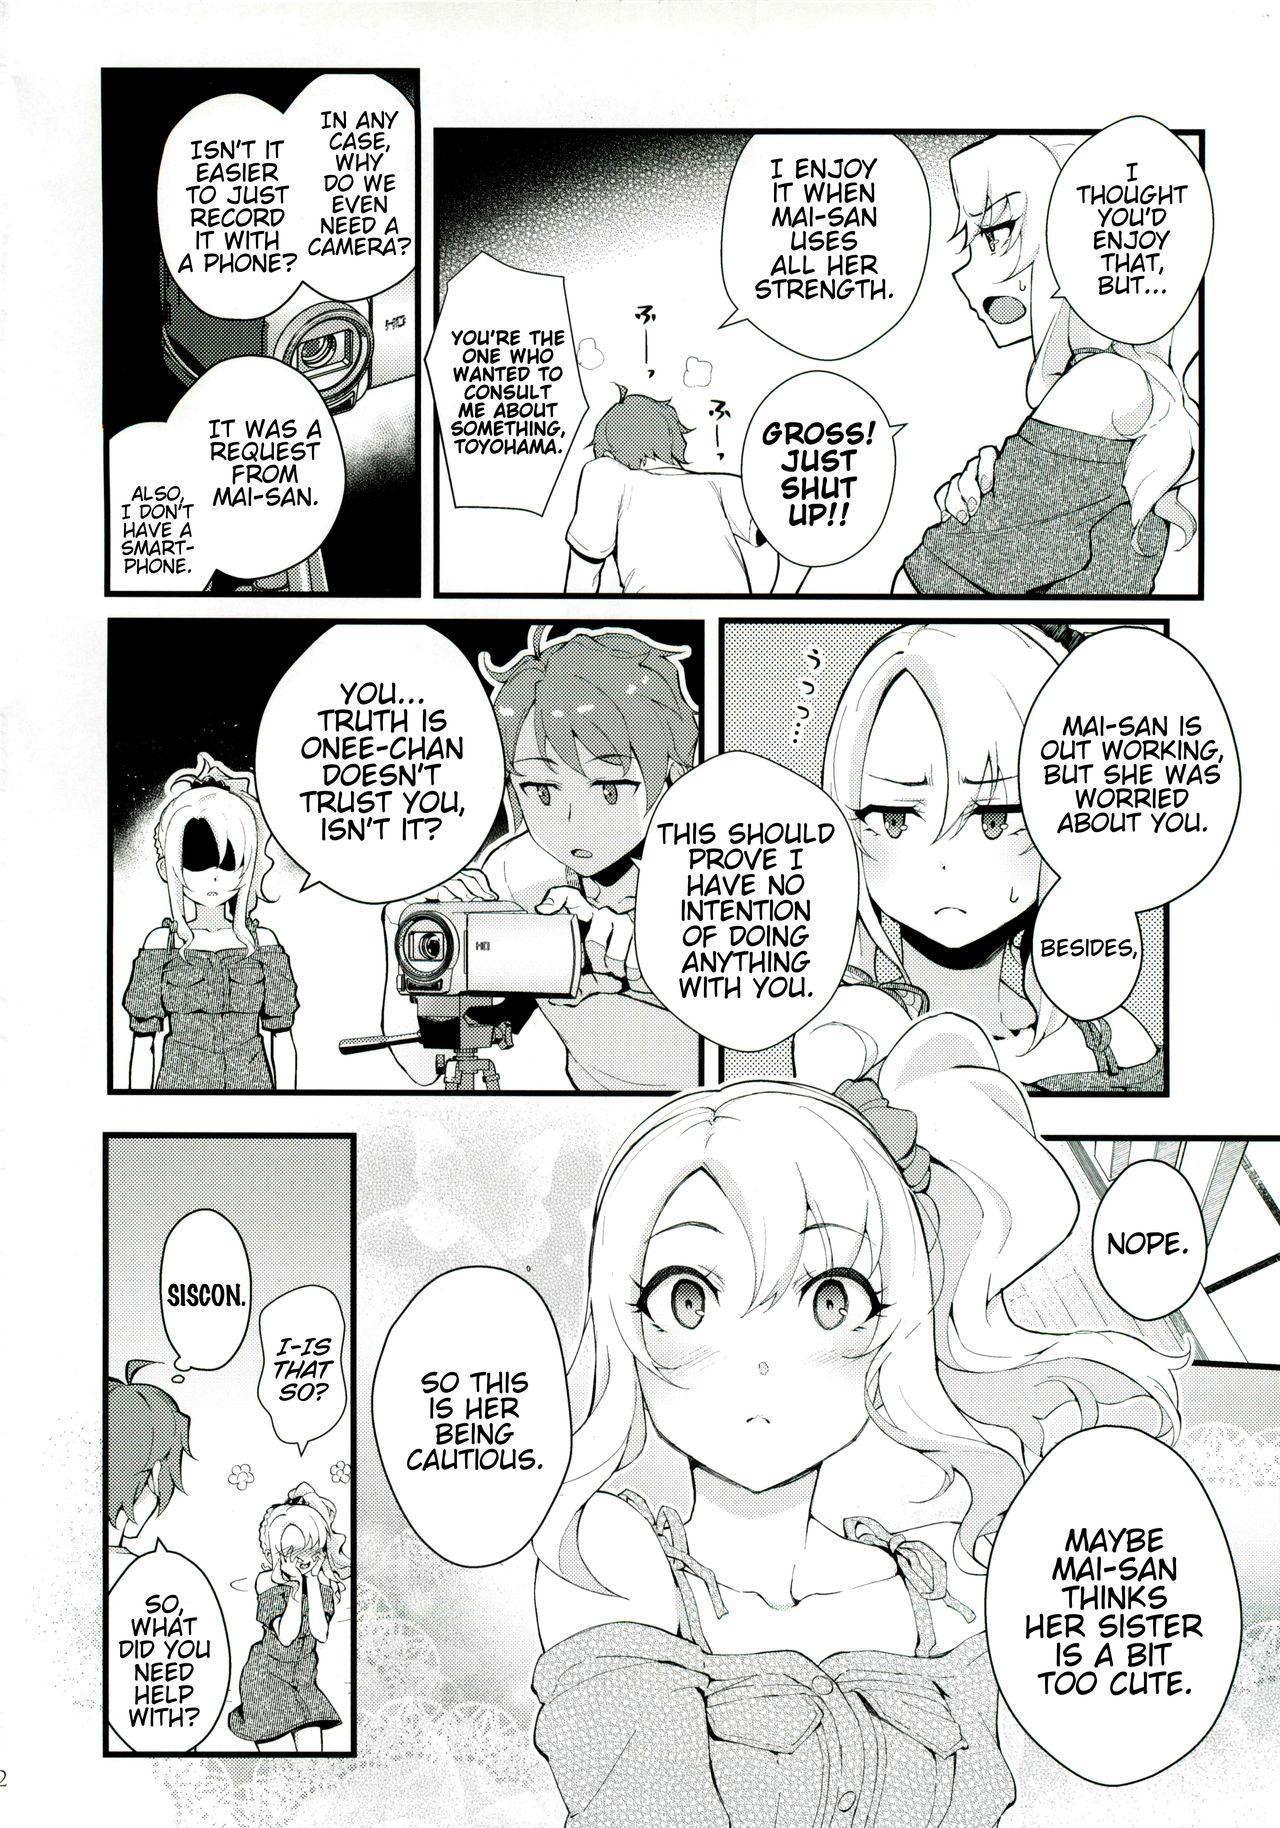 Short Hair Sisters Panic - Seishun buta yarou wa bunny girl senpai no yume o minai Highschool - Page 3